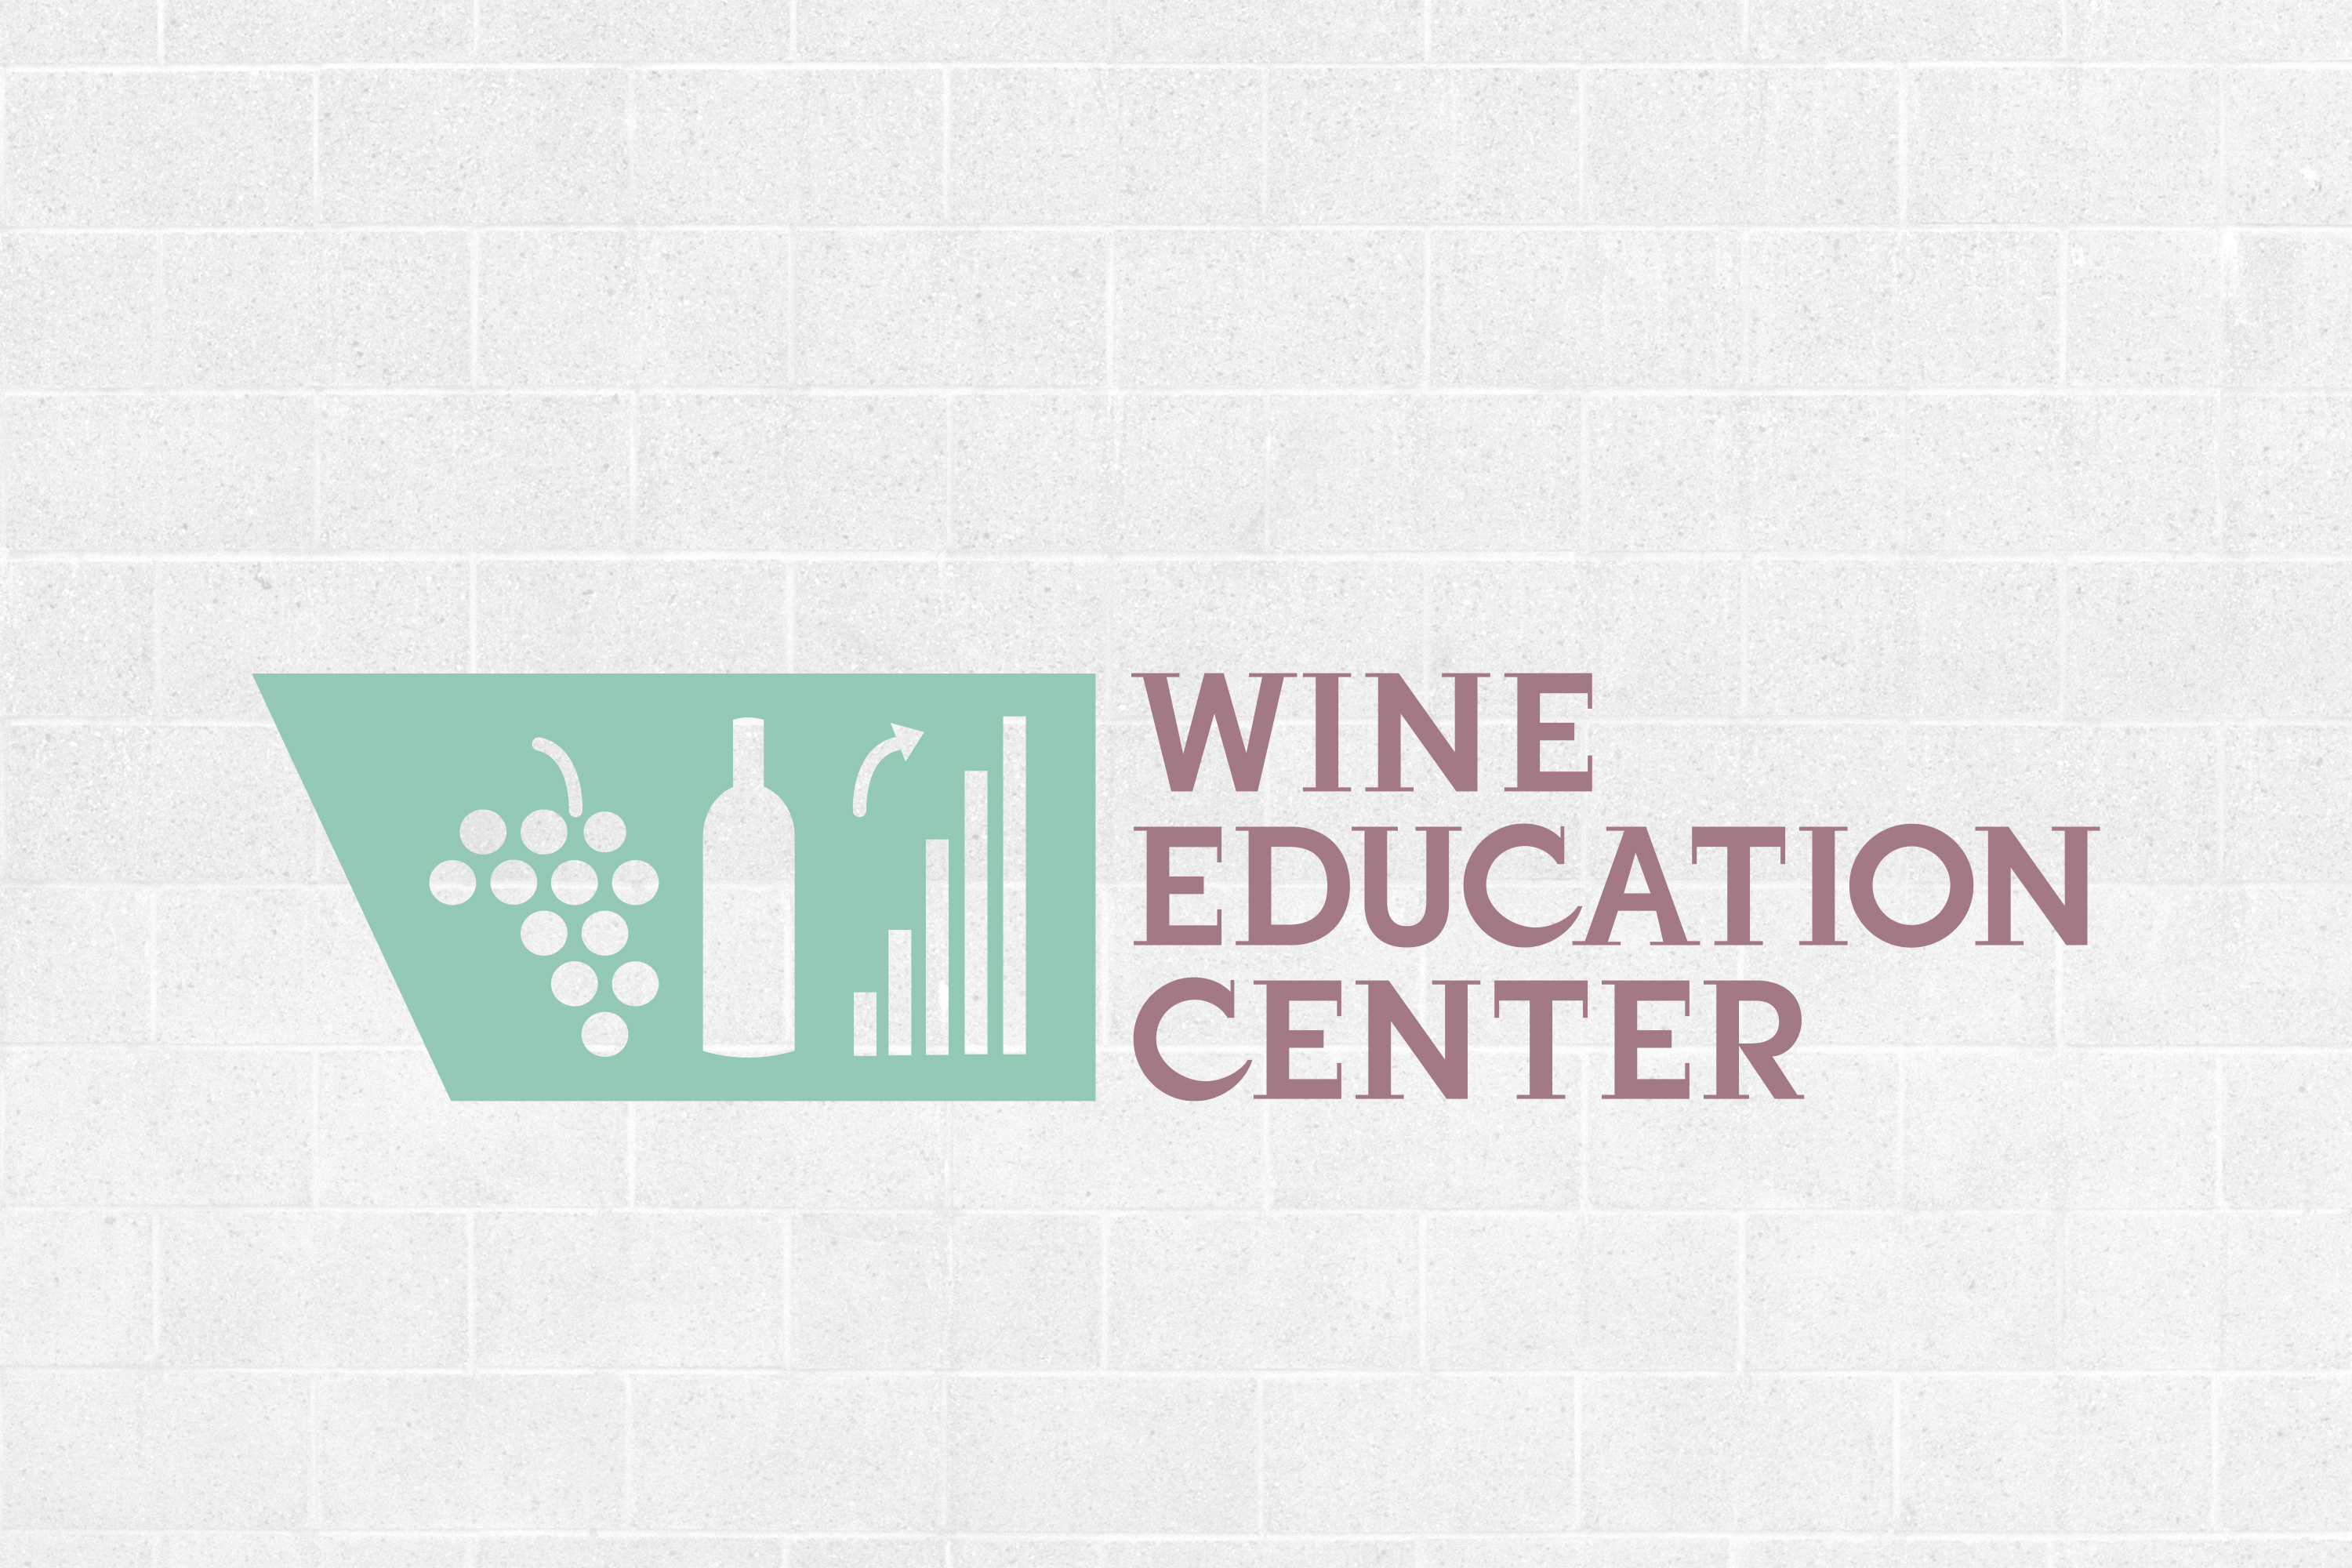 Wine Education Center logo